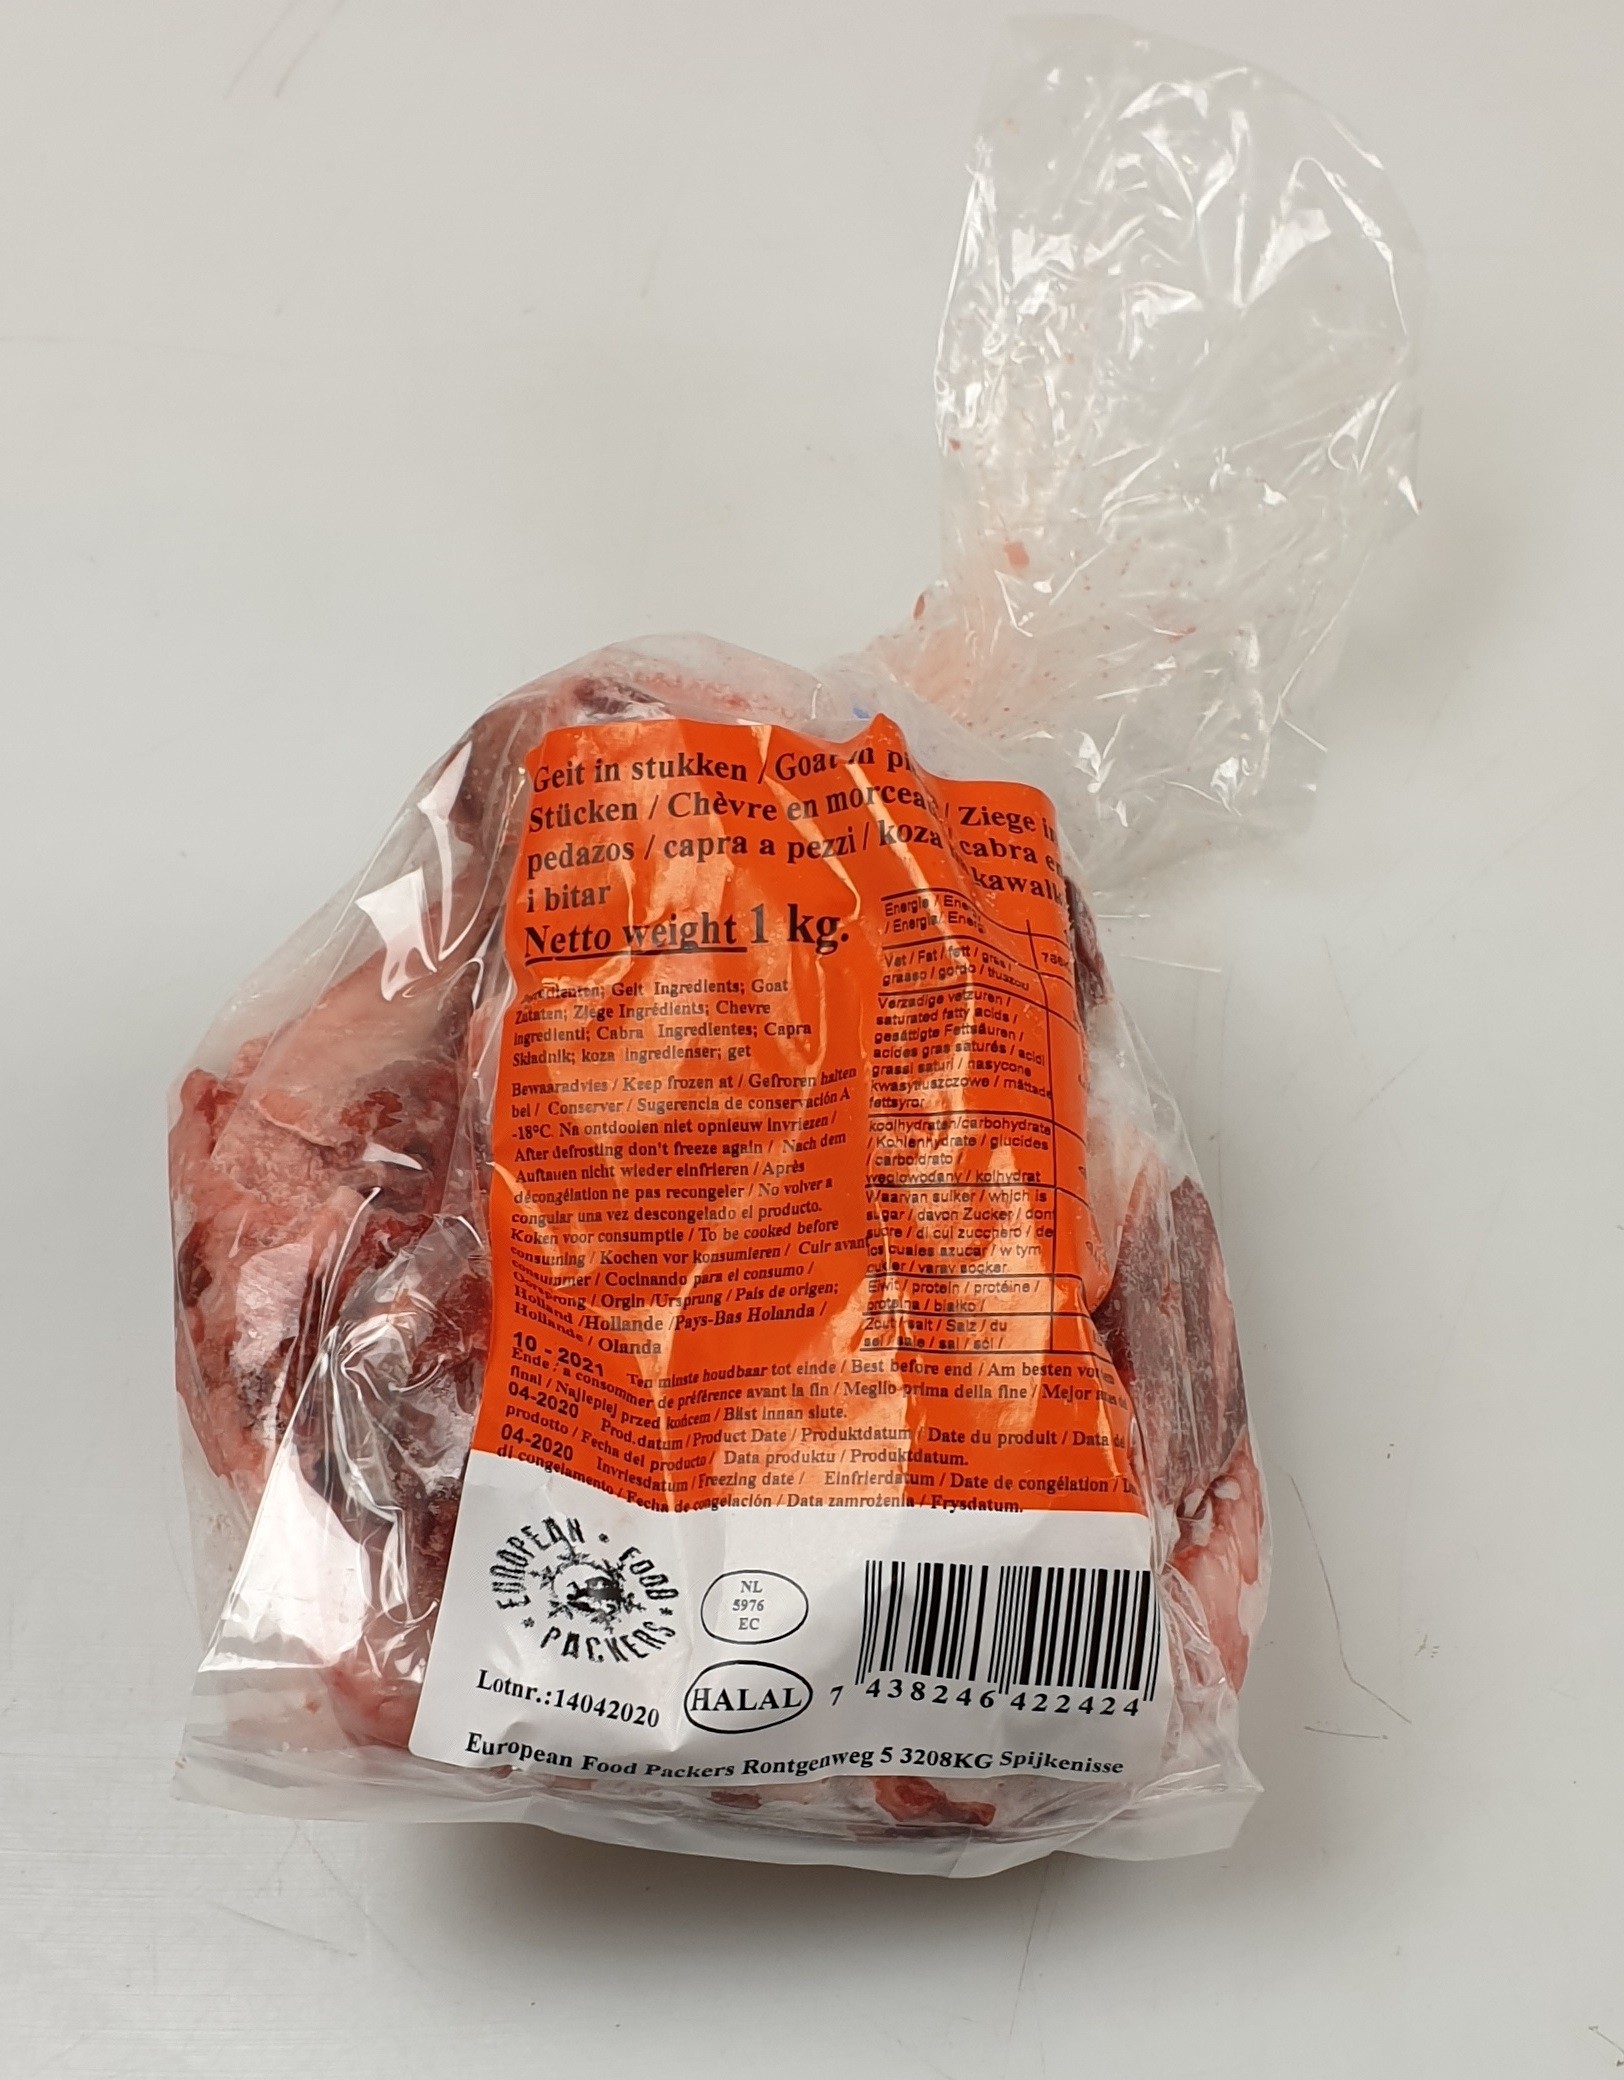 Goat meat 12 x 1 kilo-NL